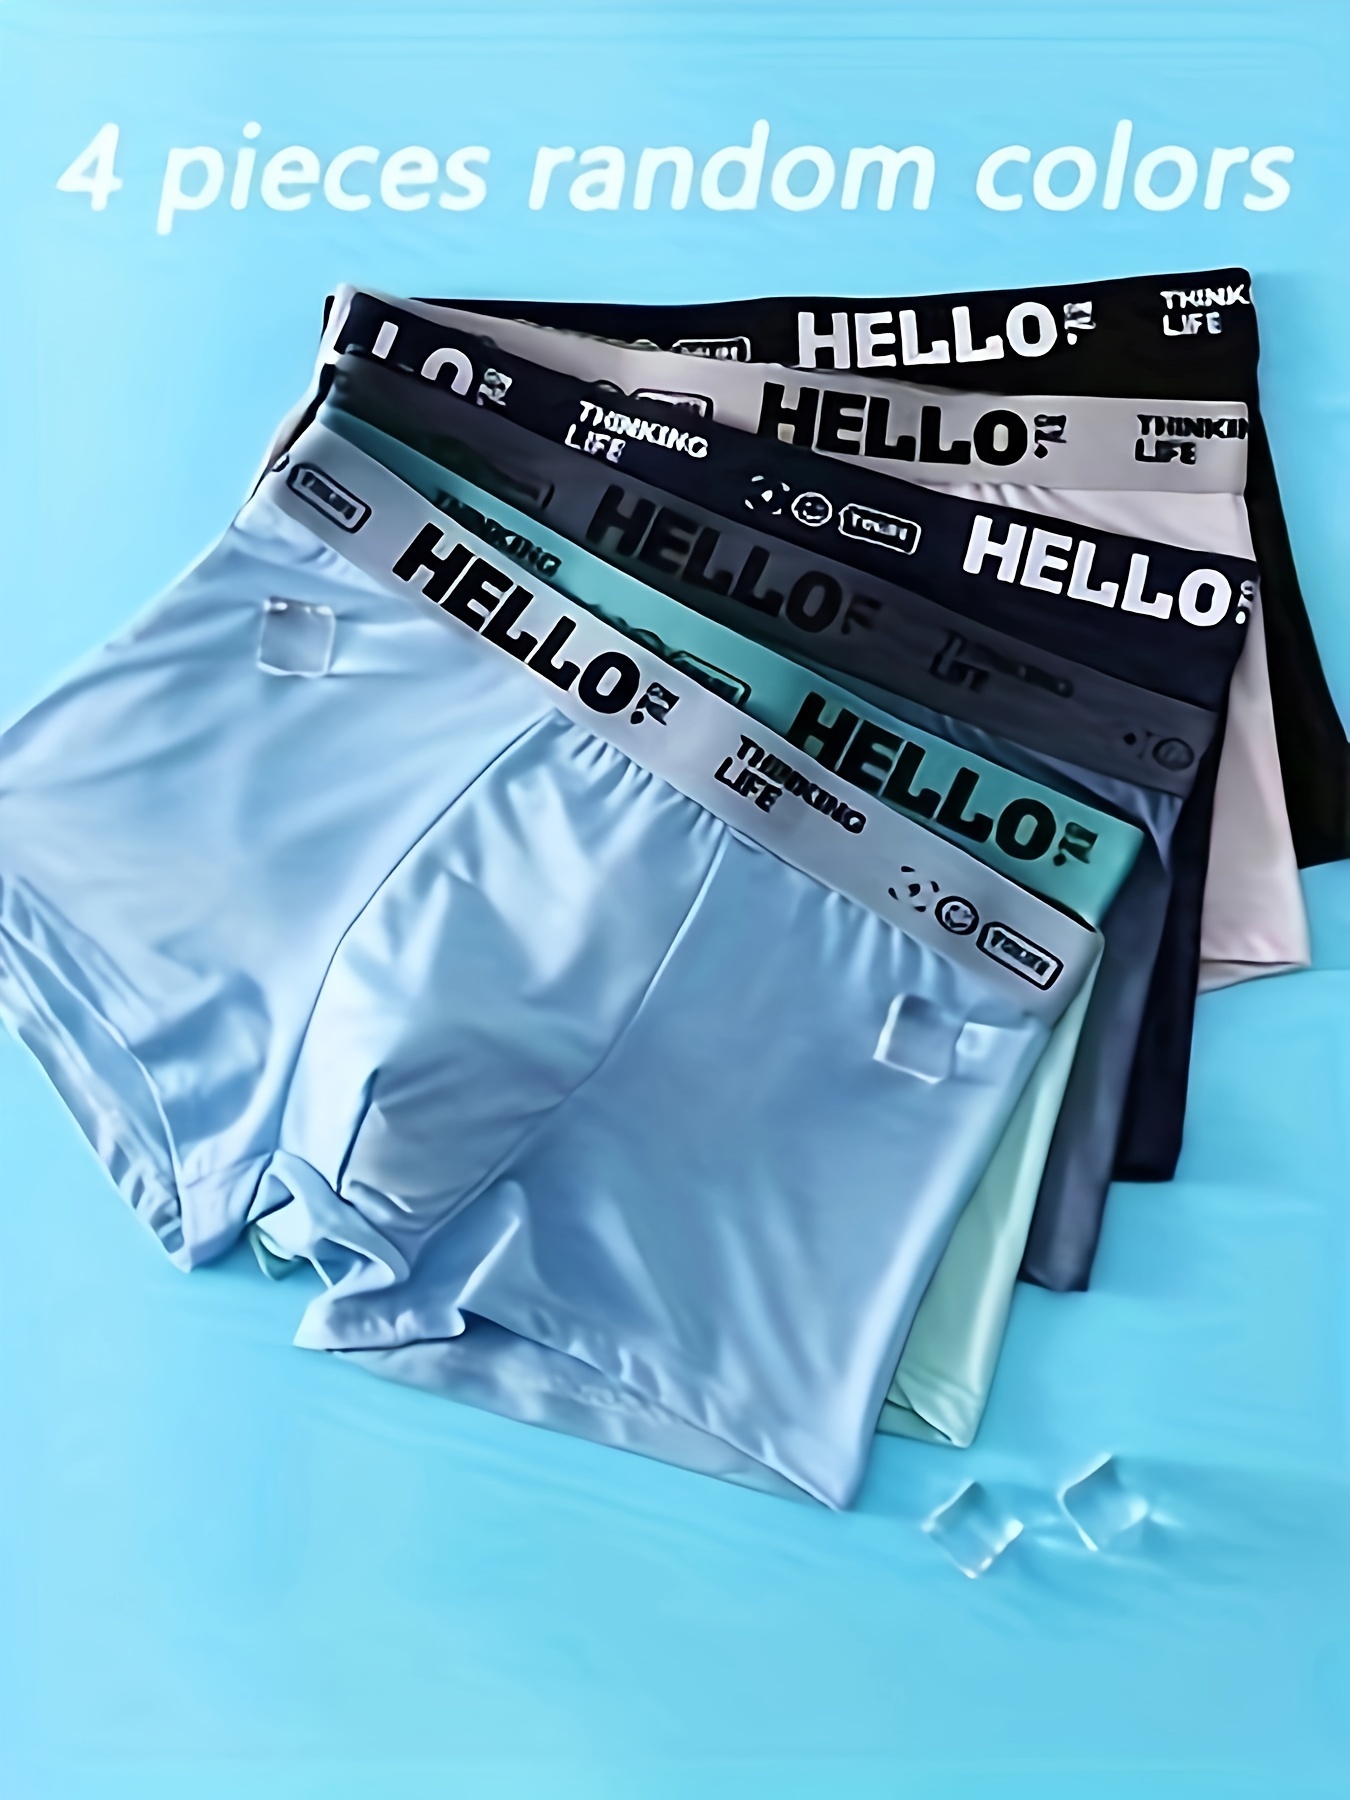 Buy Cas Men Comfortable Underpants Hello Kitty Christmas Briefs